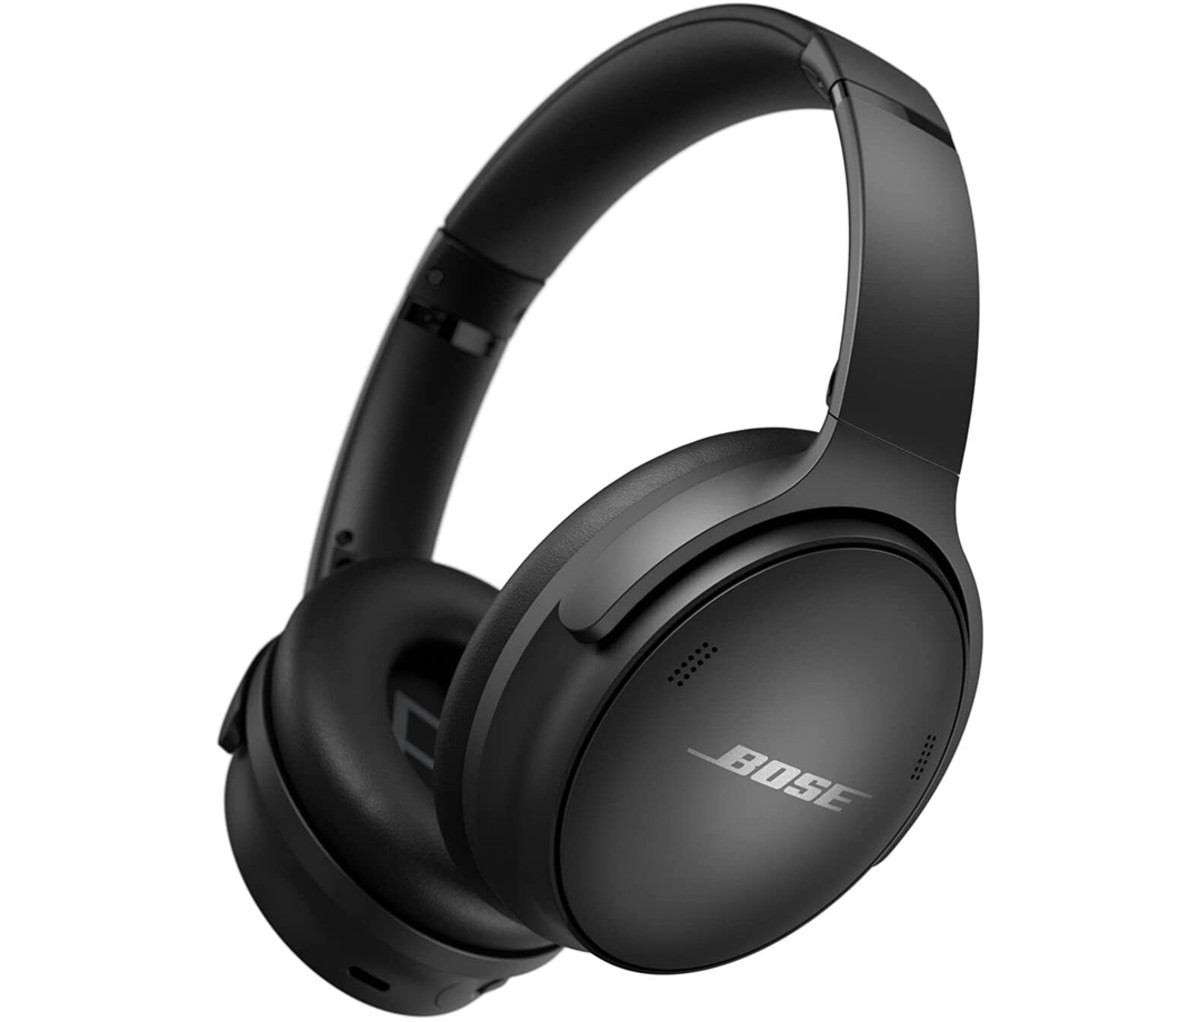 Bose QuietComfort 45 Wireless Noise Canceling Headphones